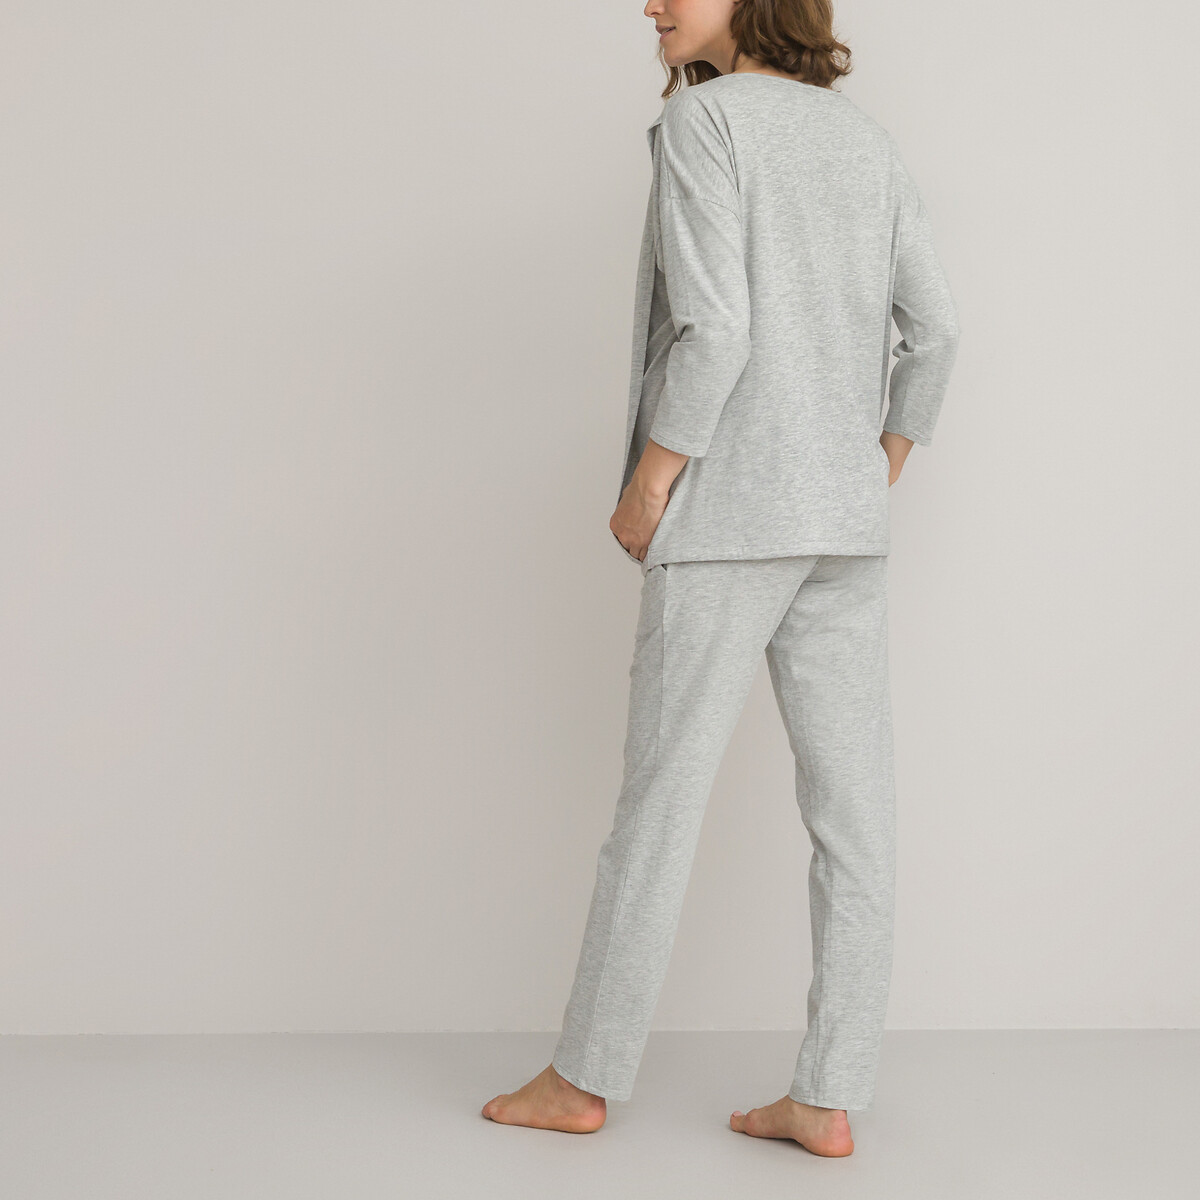 Cotton maternity/nursing pyjamas grey La Redoute Collections